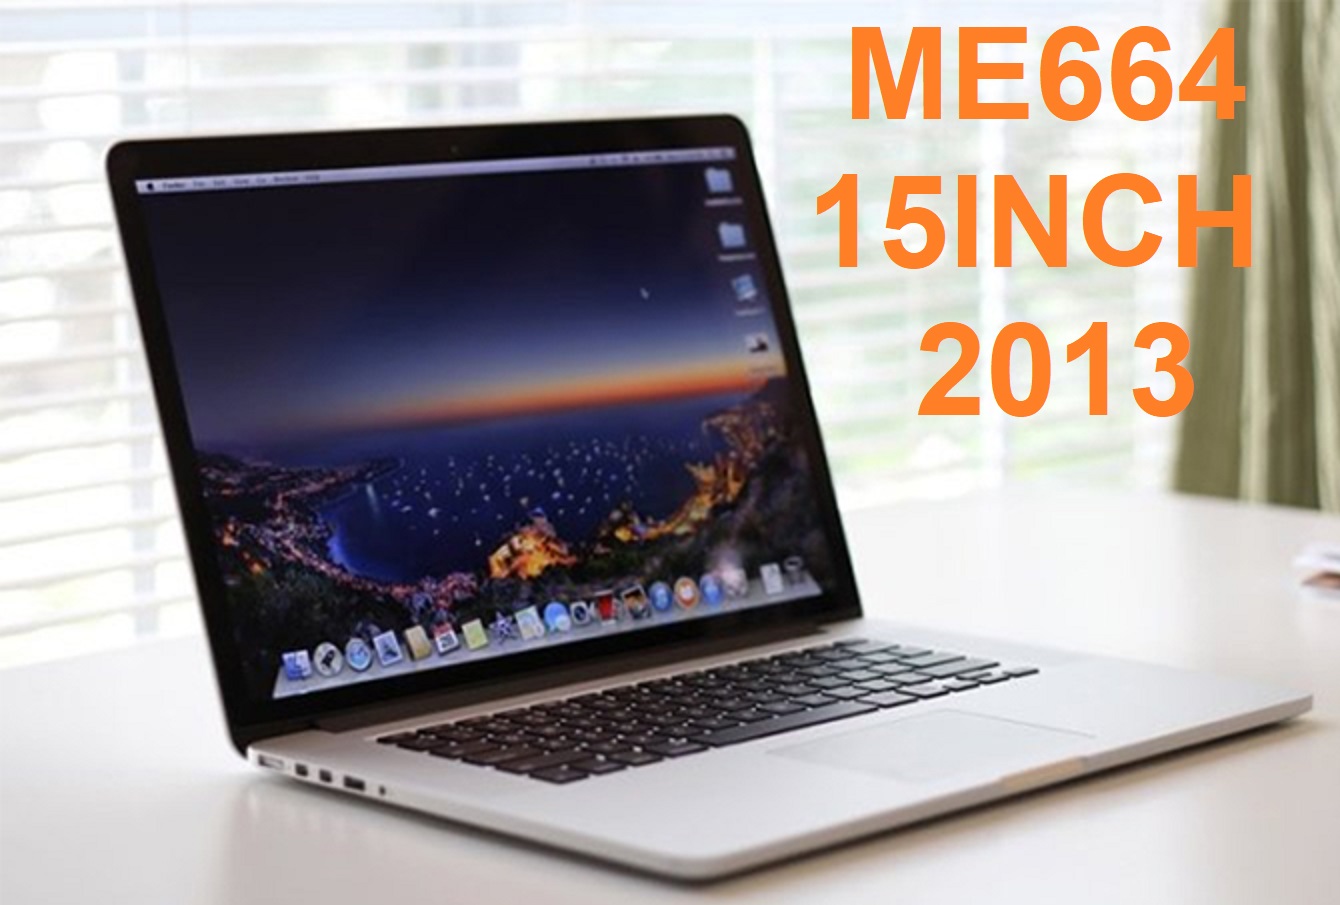 MacBook Pro 15inch Early 2013 Core i7-3635QM 2.4GHz Ram 8GB ssd 256GB ME664 Model A1398 EMC 2673 Retina Early 2013 MacBookPro10,1